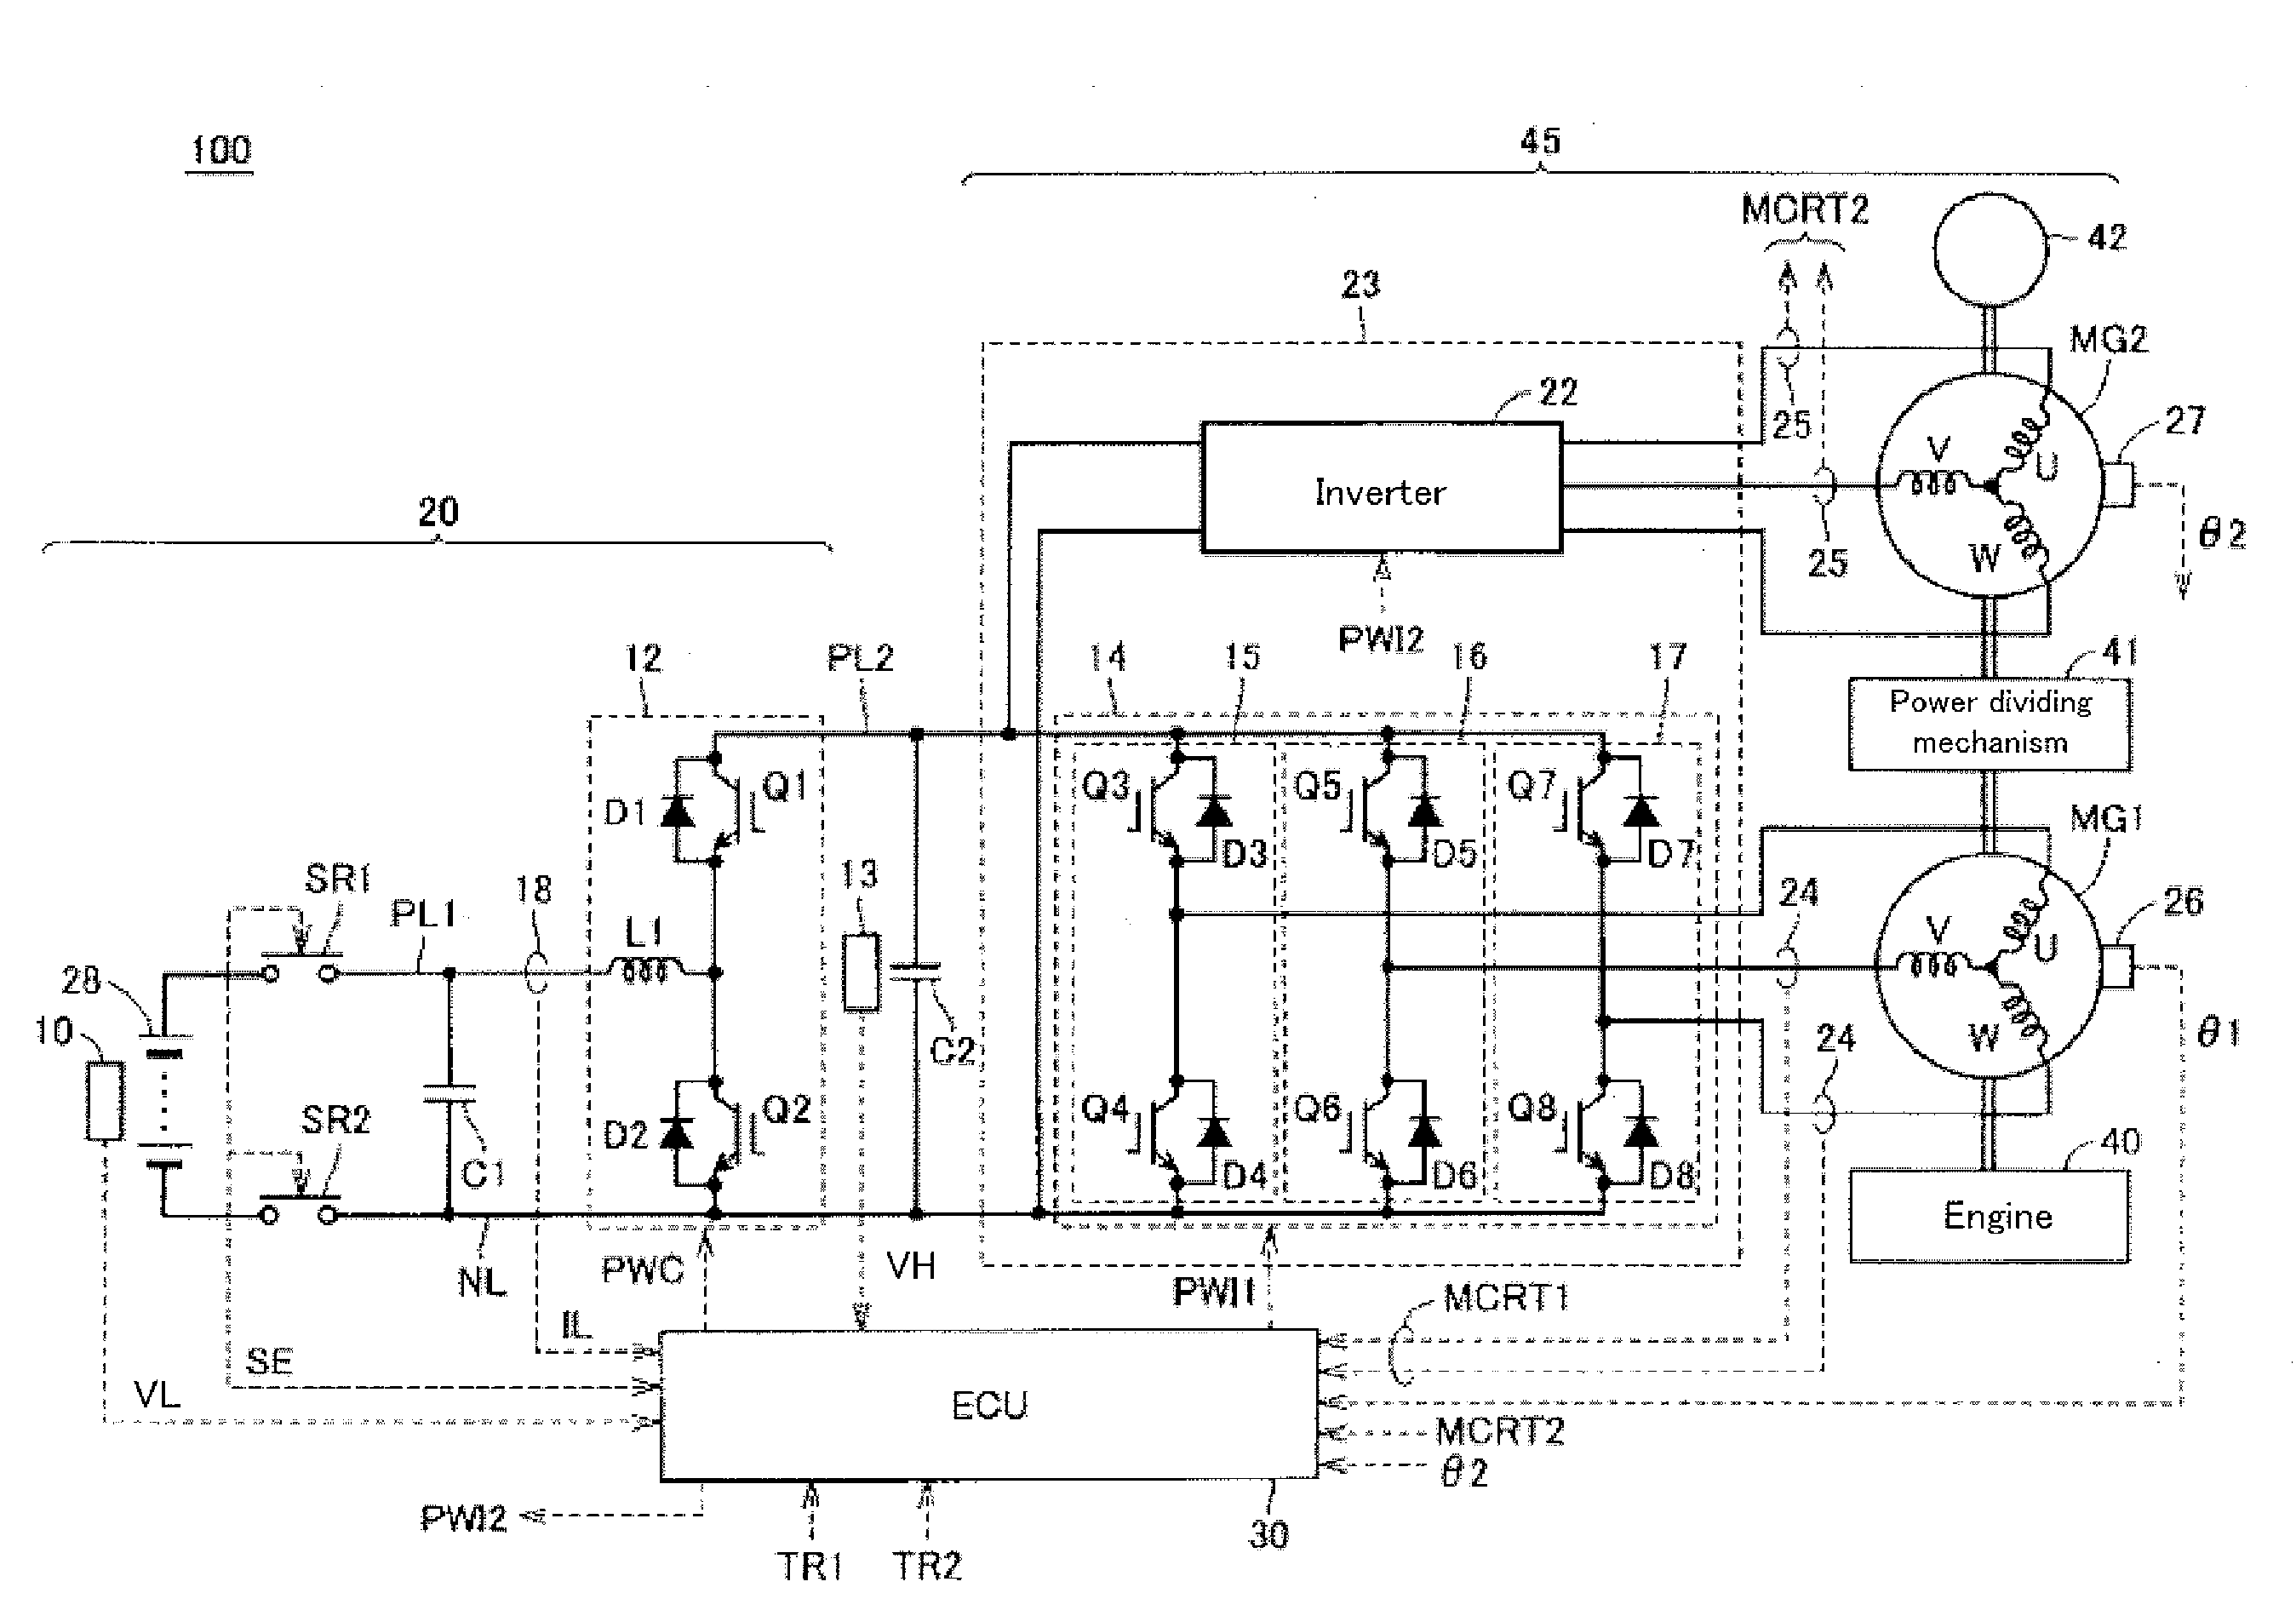 Apparatus for controlling voltage converting apparatus